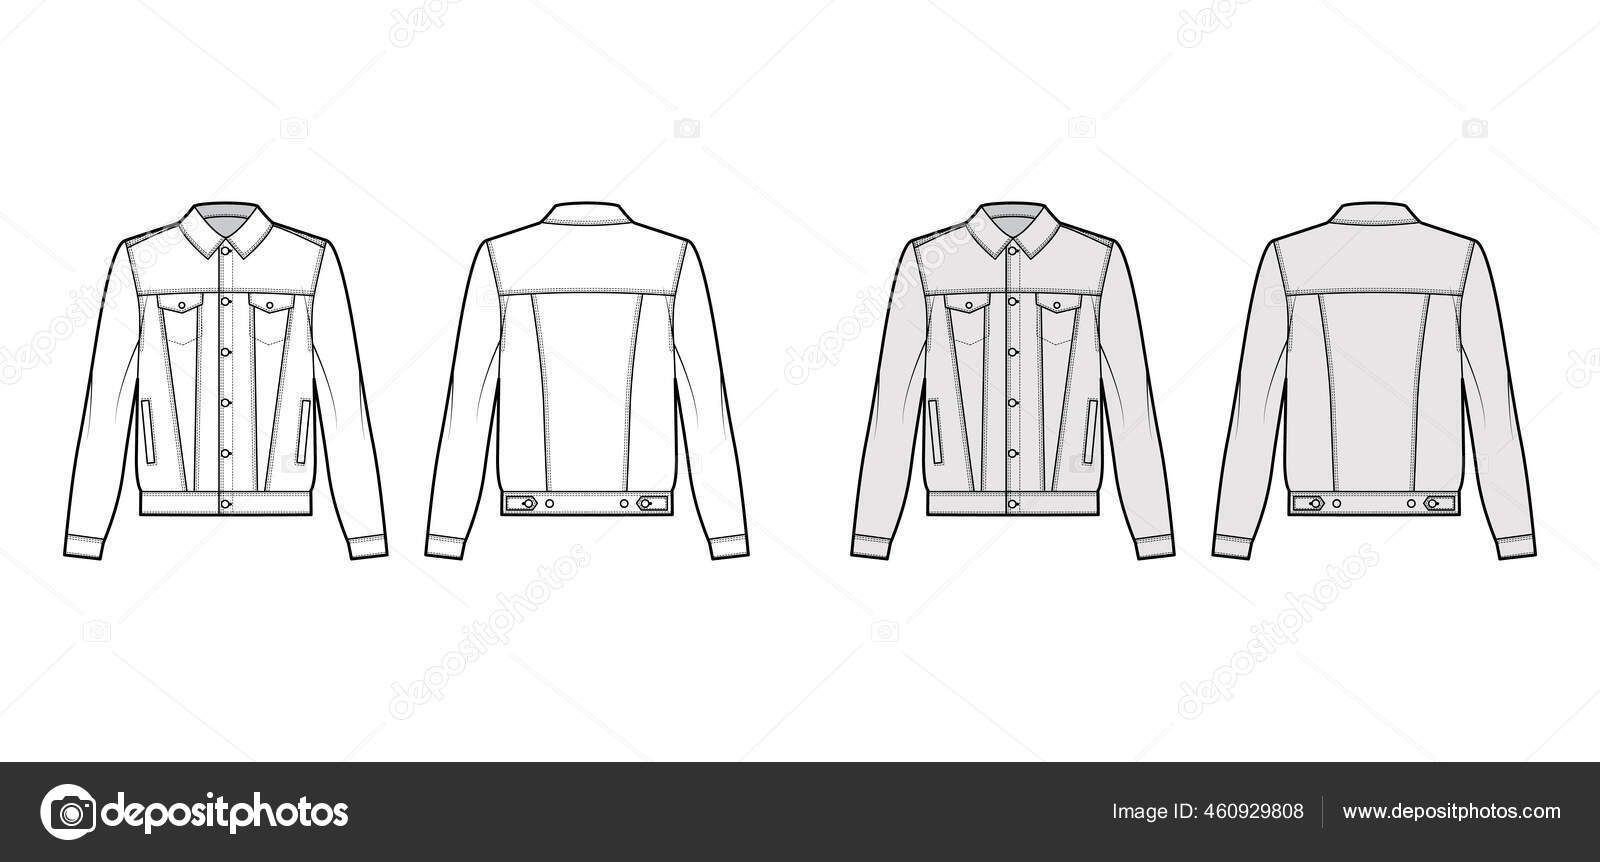 Standard denim jacket technical fashion illustration with oversized ...